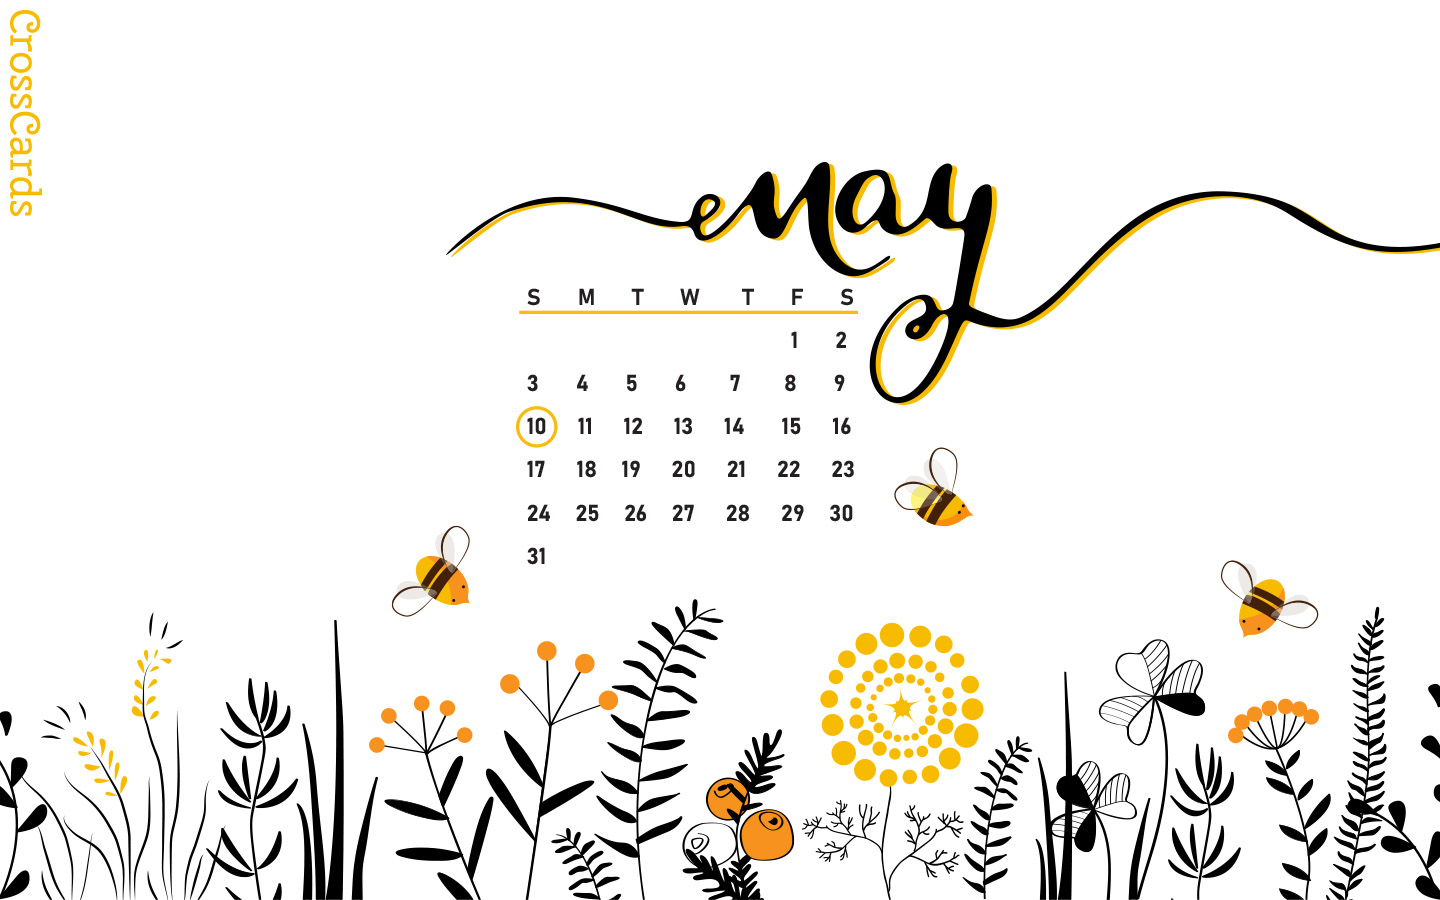 May 2020 - Bumblebees mobile phone wallpaper